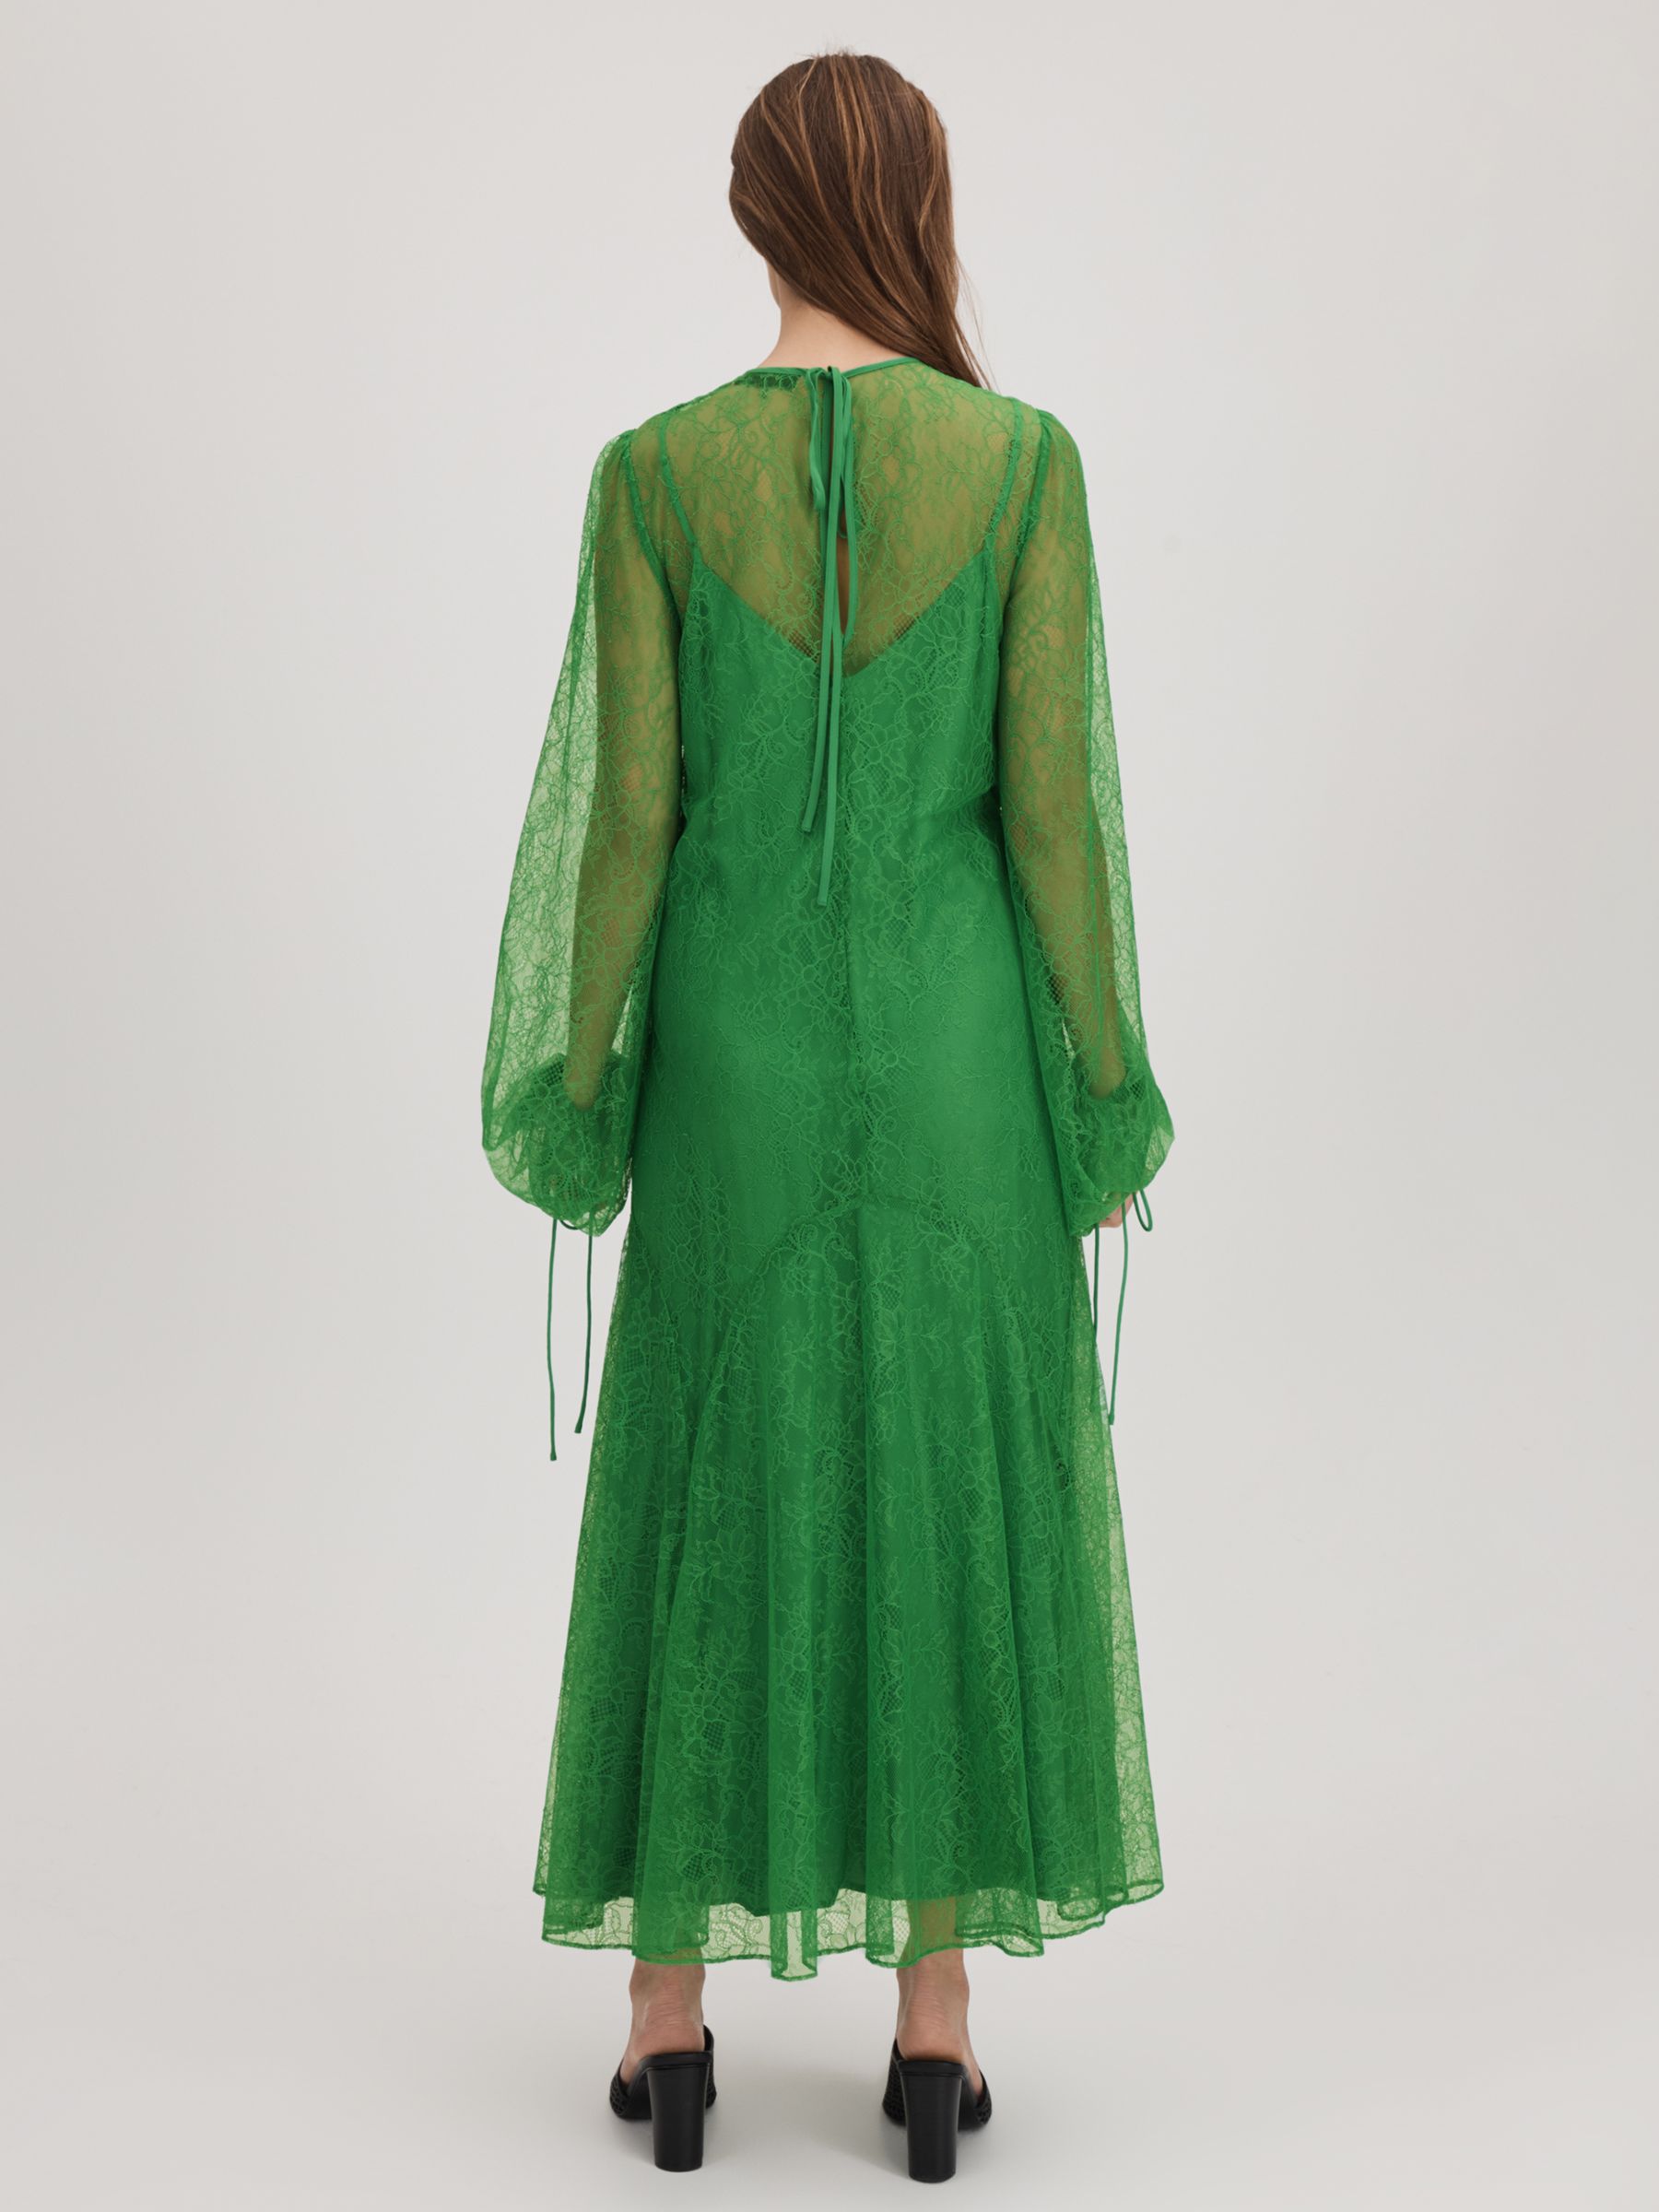 FLORERE Lace Maxi Dress, Bright Green, 16